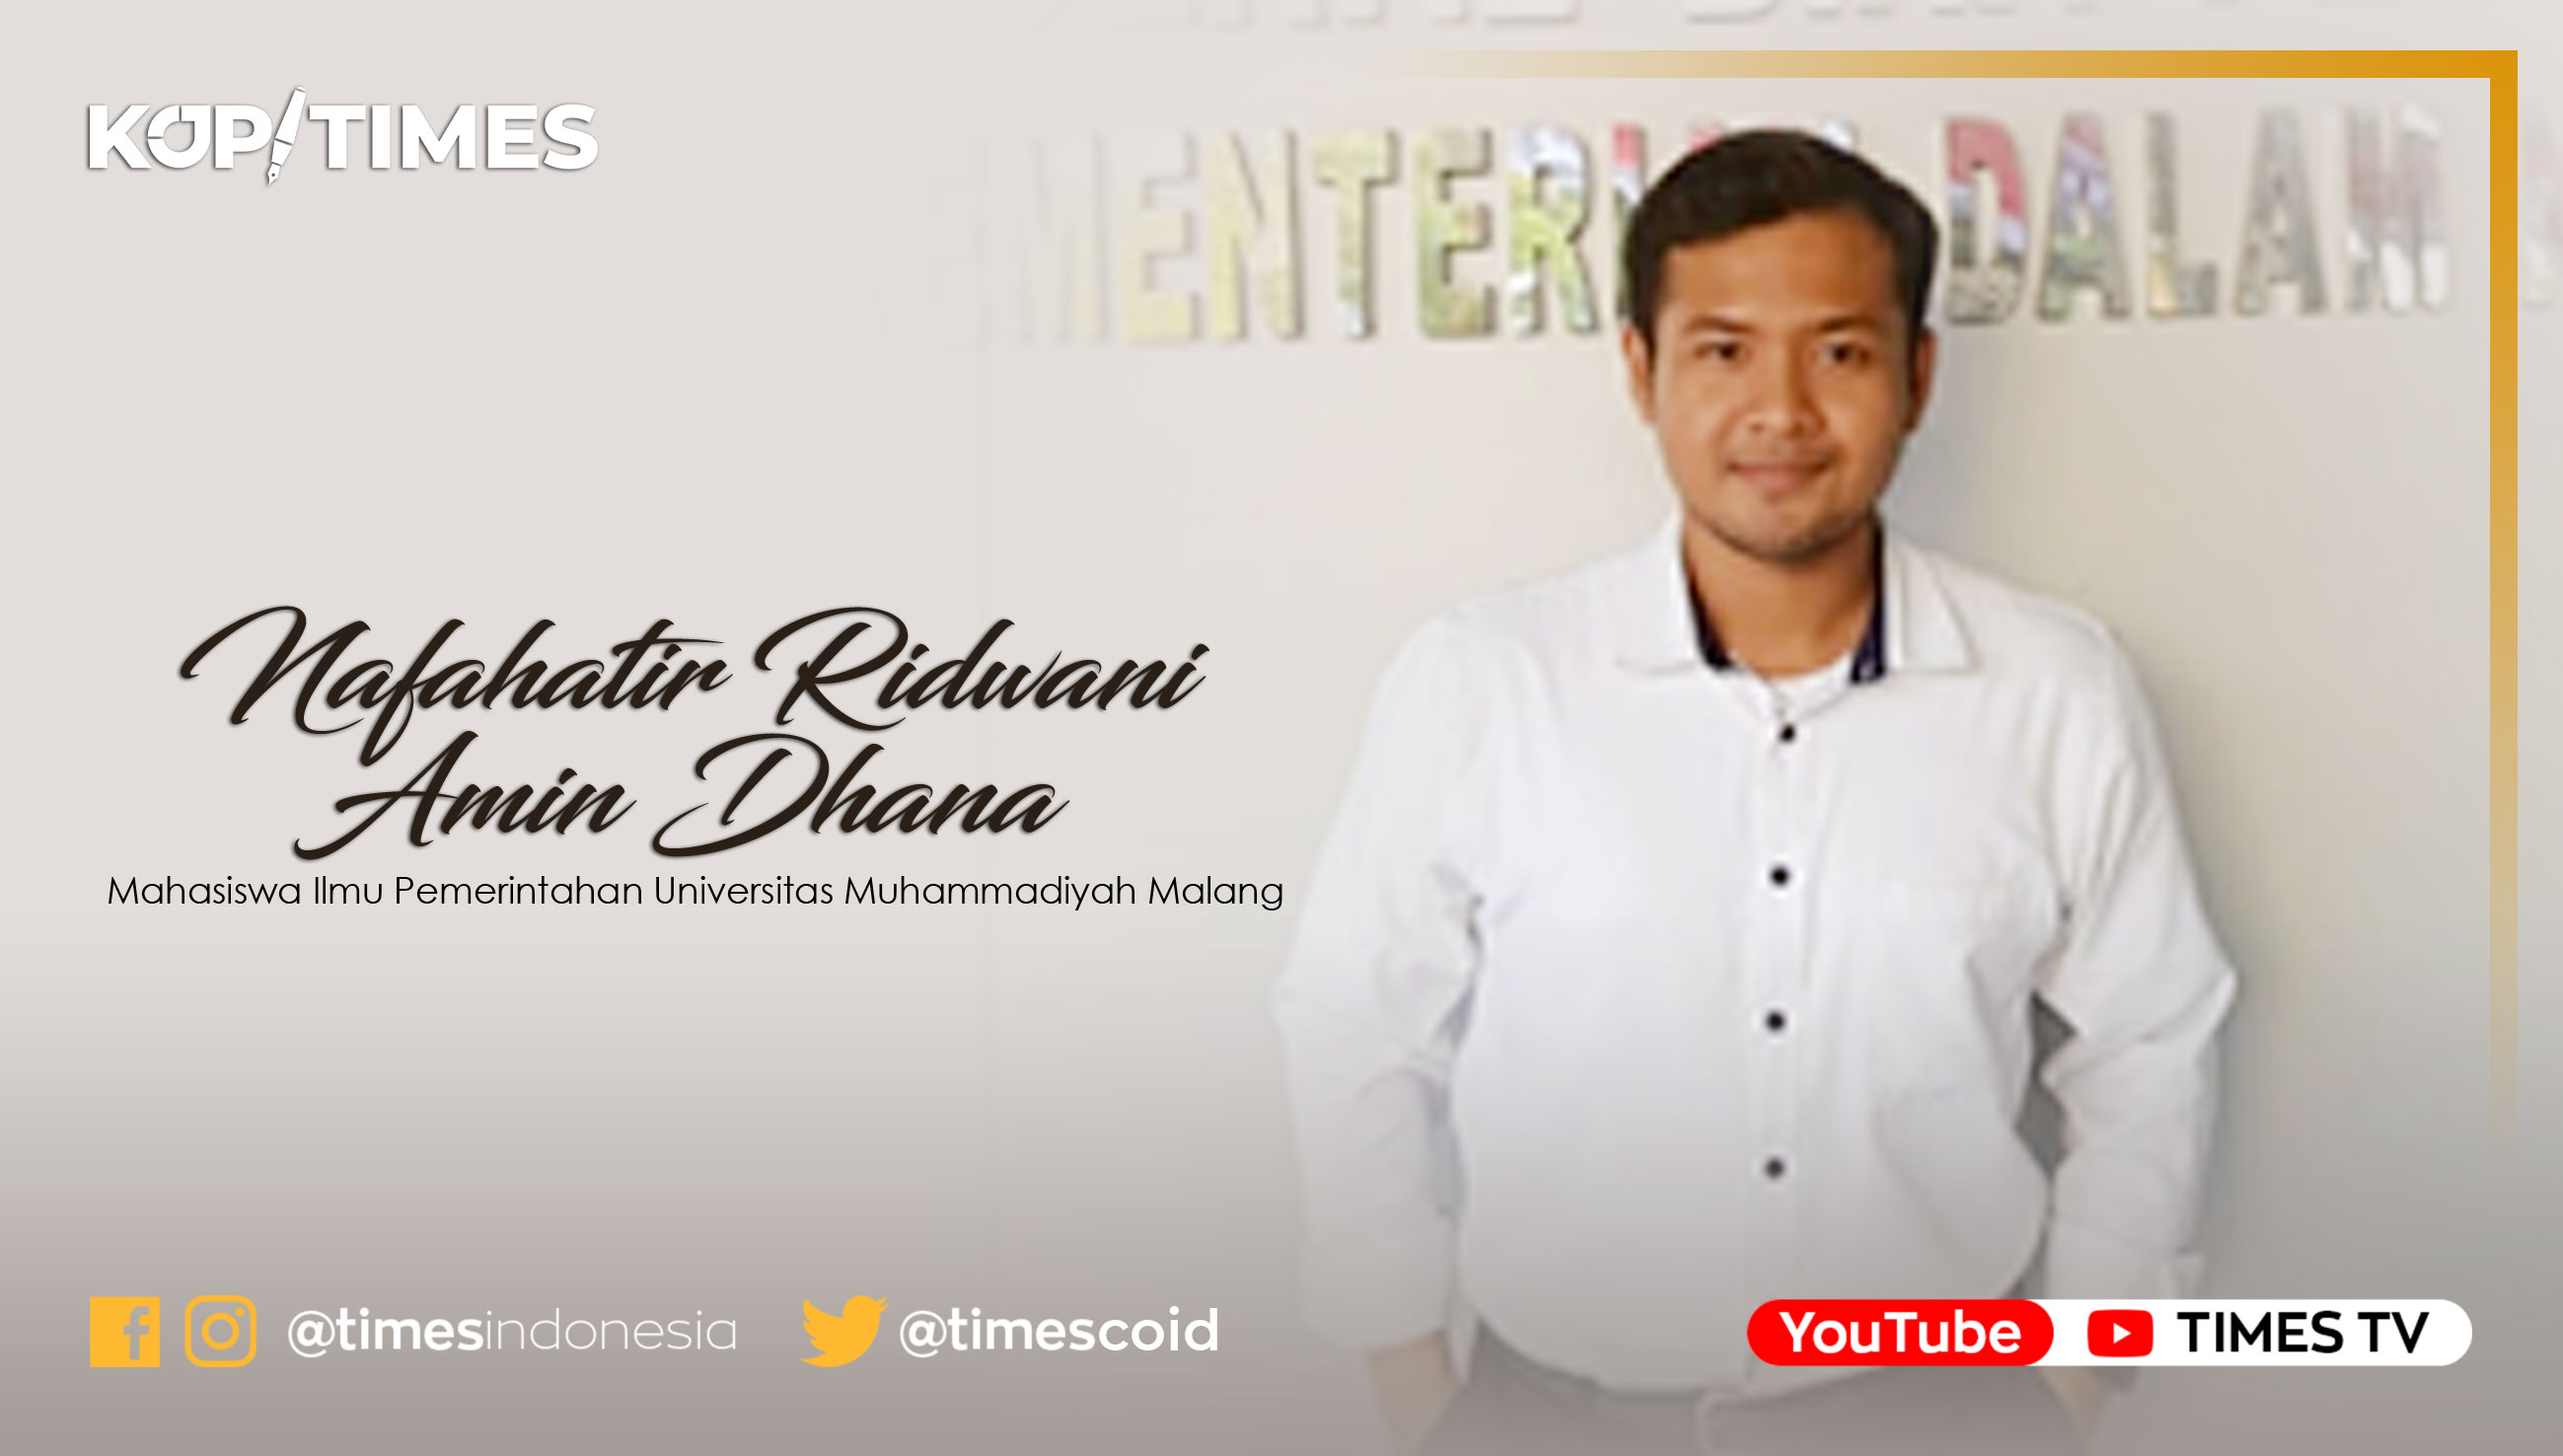 Nafahatir Ridwani Amin Dhana, Mahasiwa Ilmu Pemerintahan Universitas Muhammadiyah Malang.